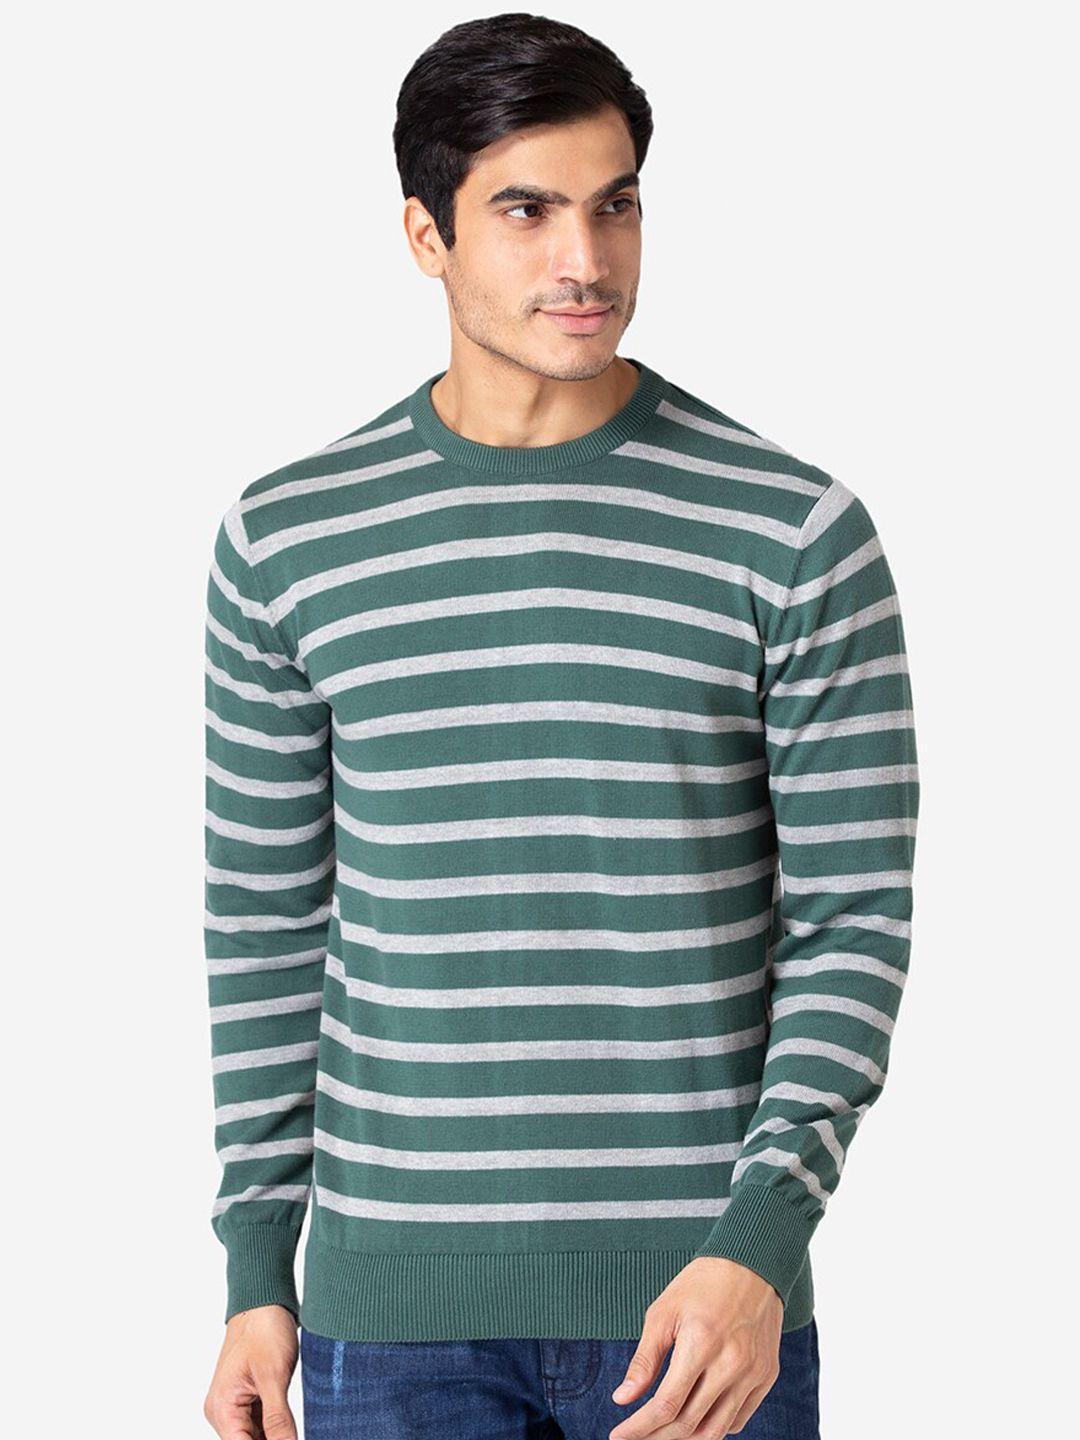 allen-cooper-men-green-&-white-striped-pullover-sweater